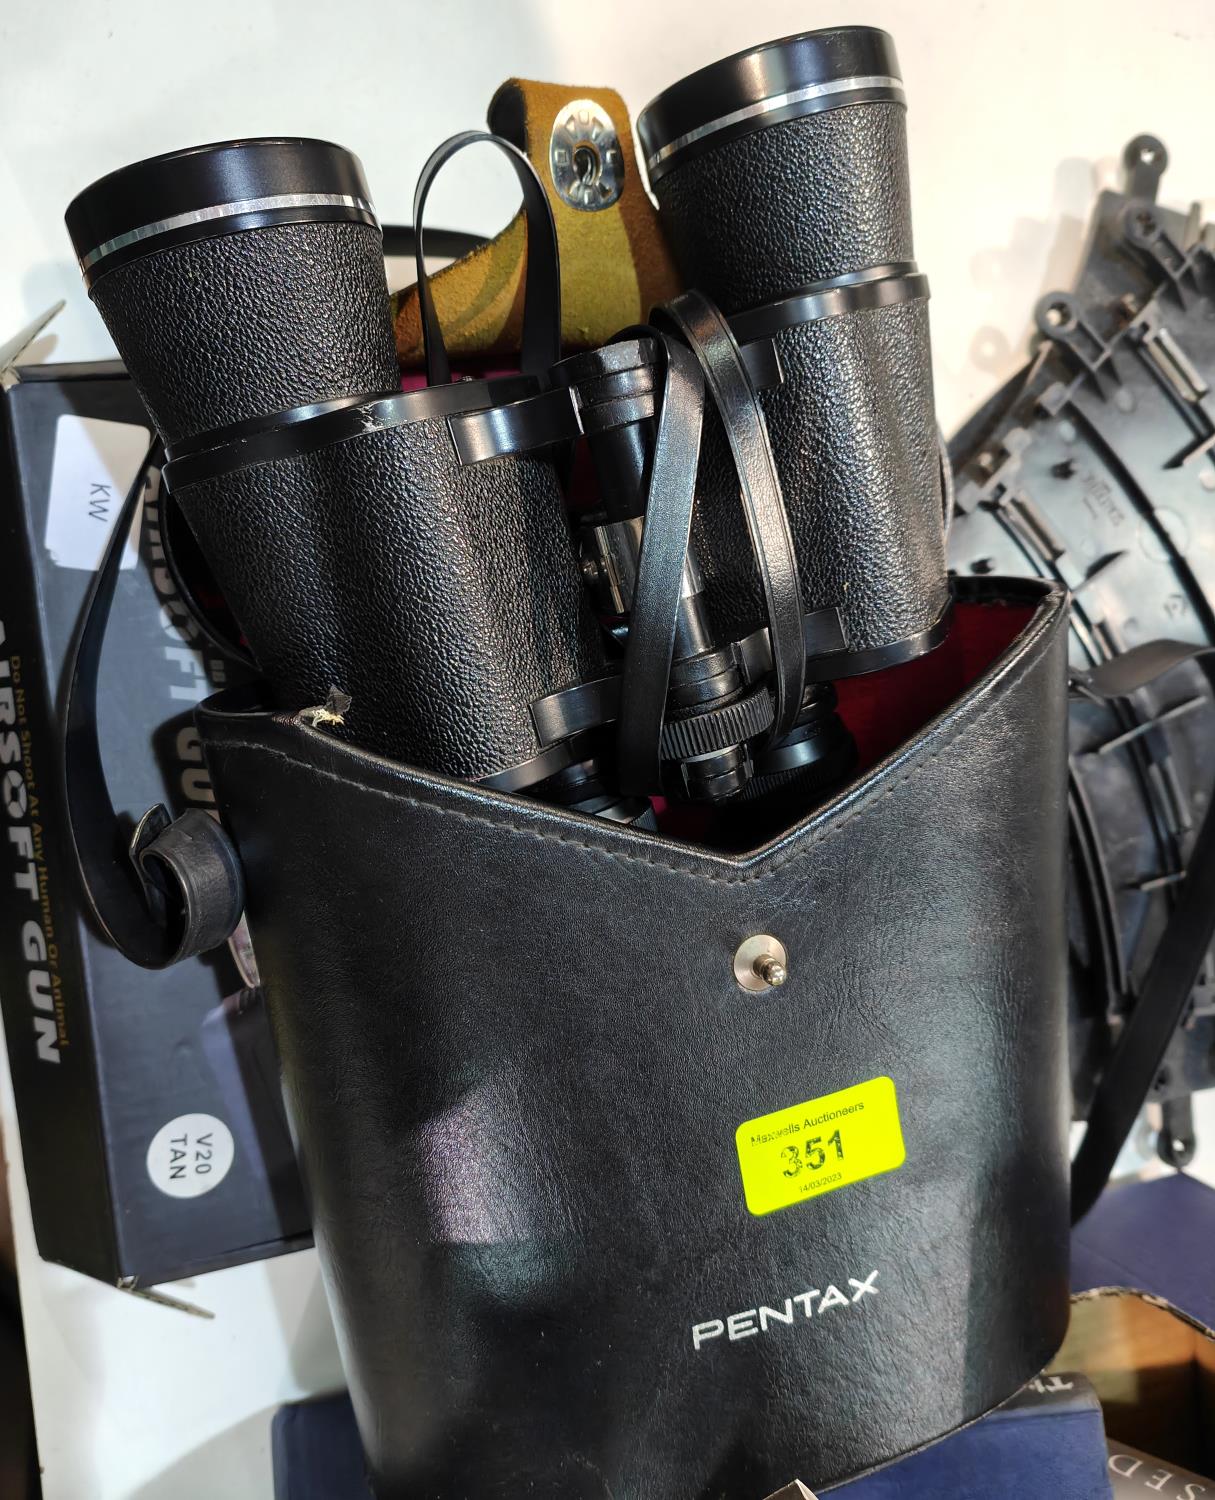 A cased pair of Pentax 16 x 50 binoculars; an "Airsoft" toy gun